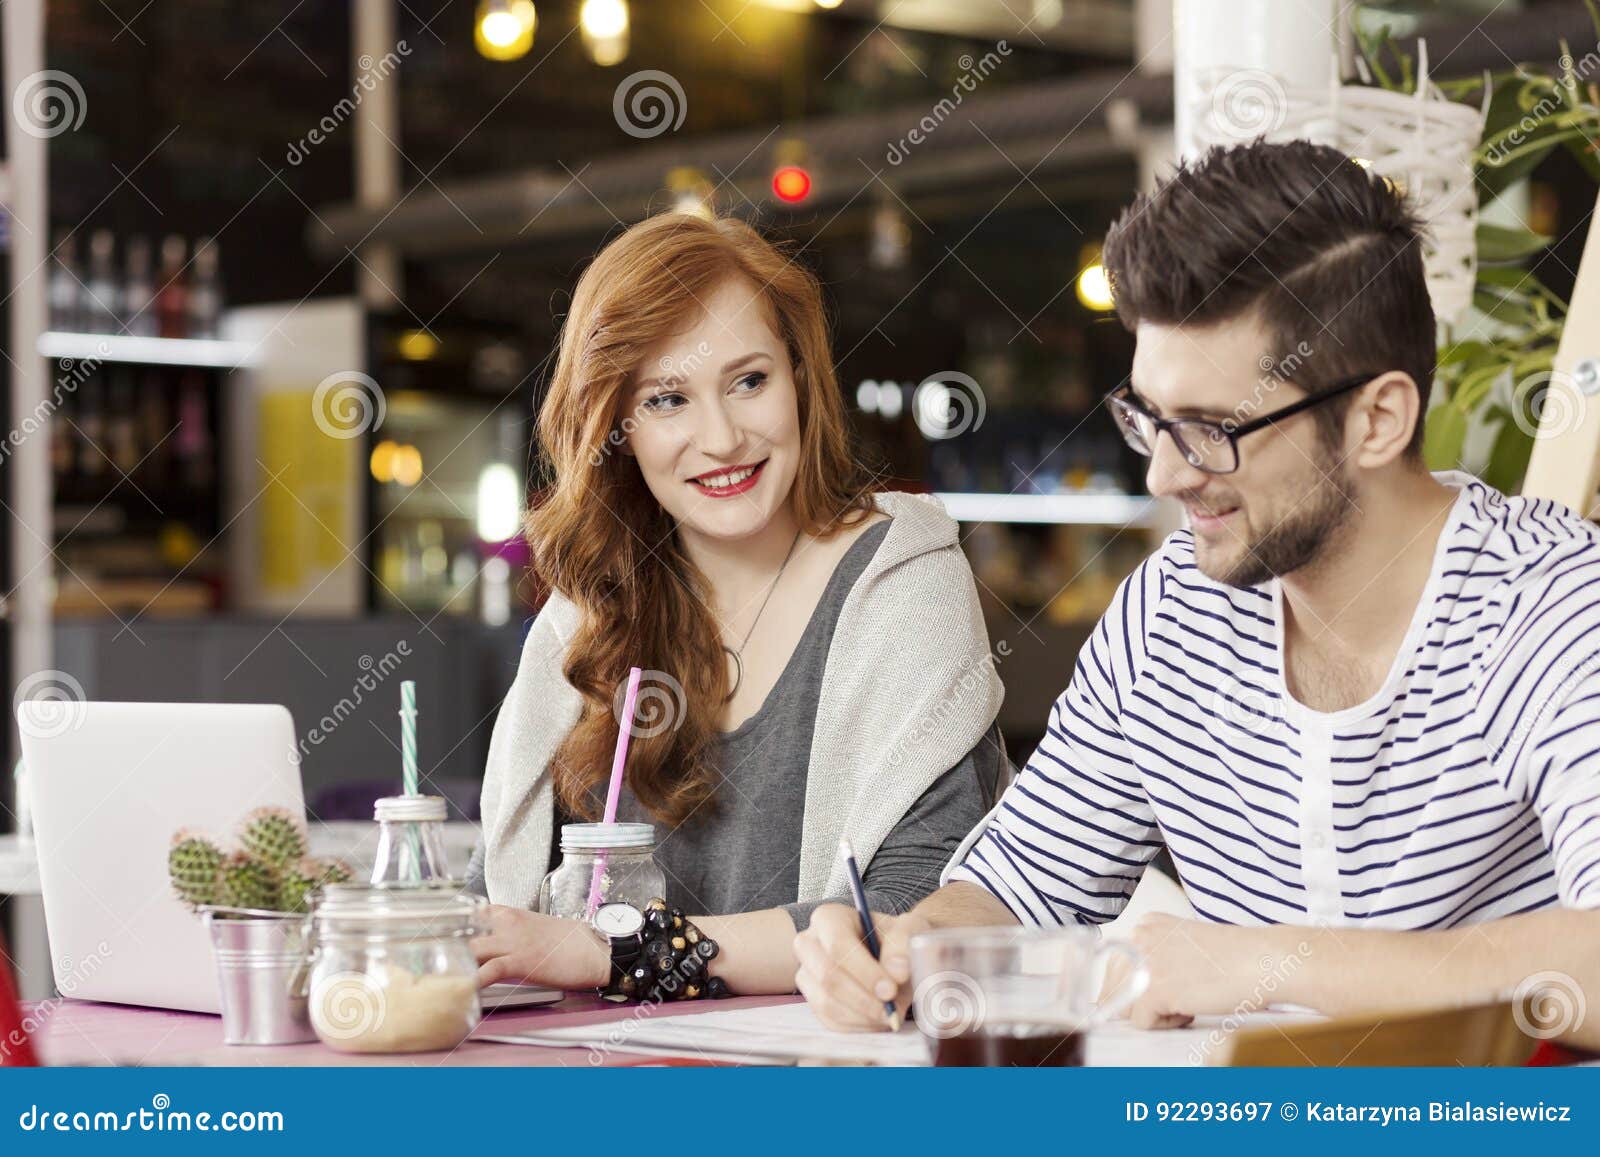 freelance couple enjoying coffee break